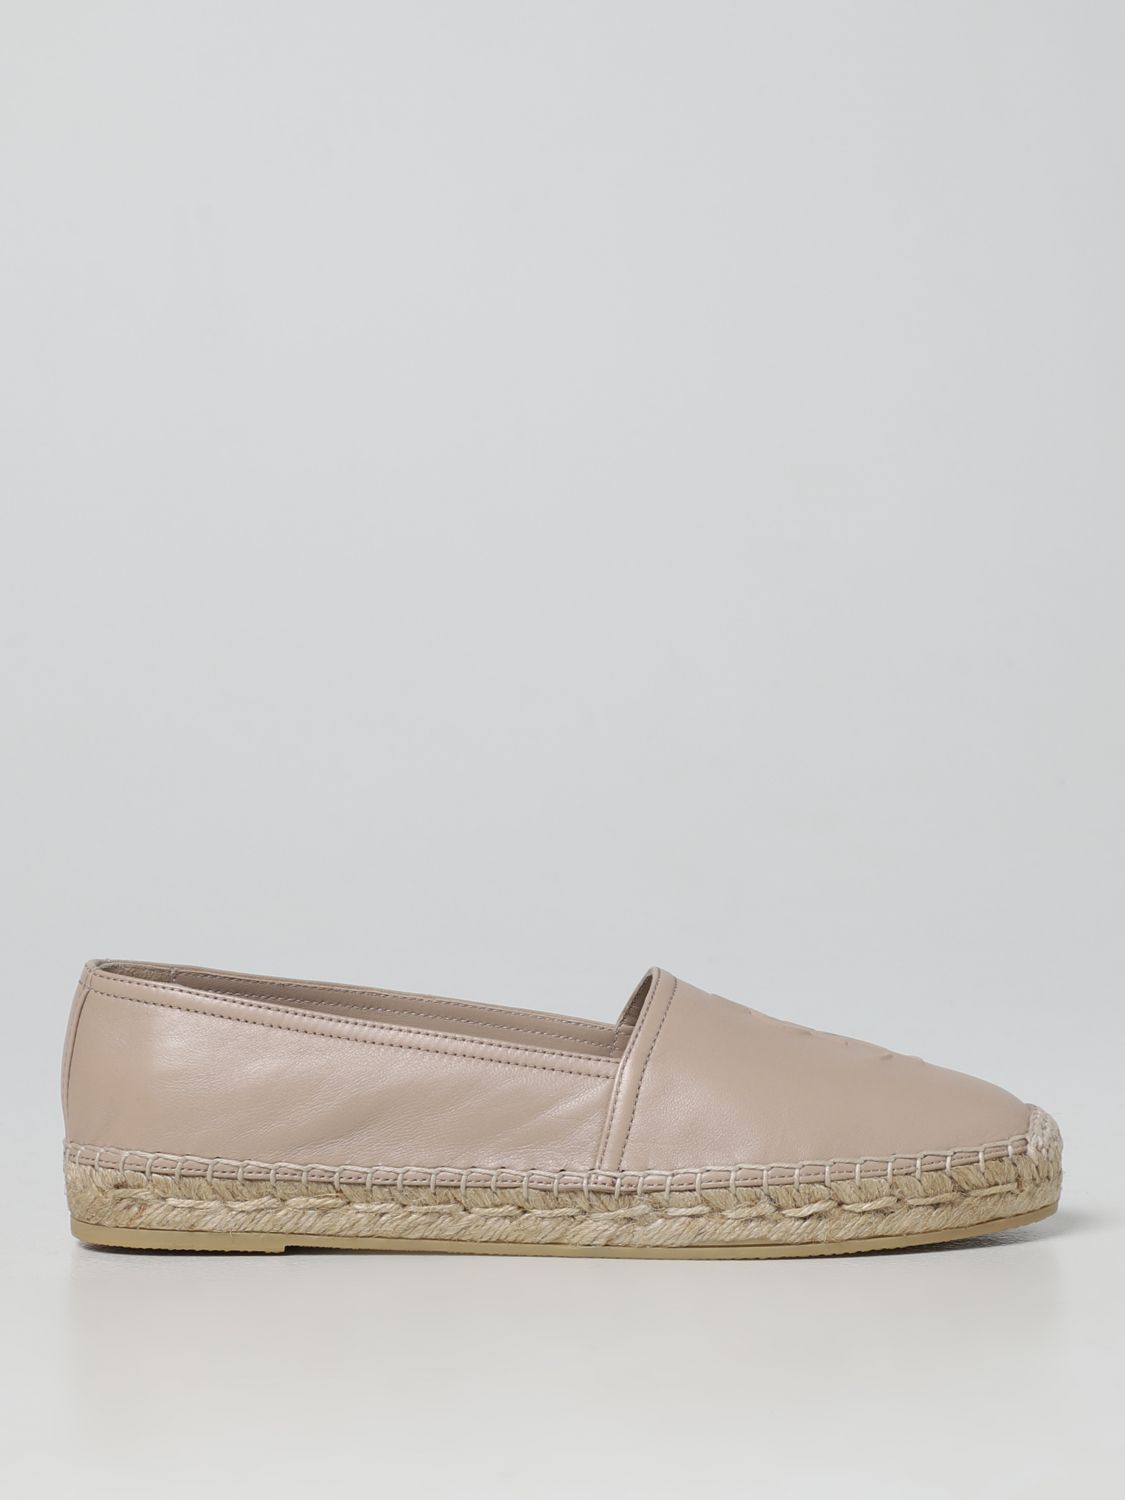 SAINT Shoes woman - Blush Pink | Saint Laurent espadrilles 458573AAALP online on GIGLIO.COM